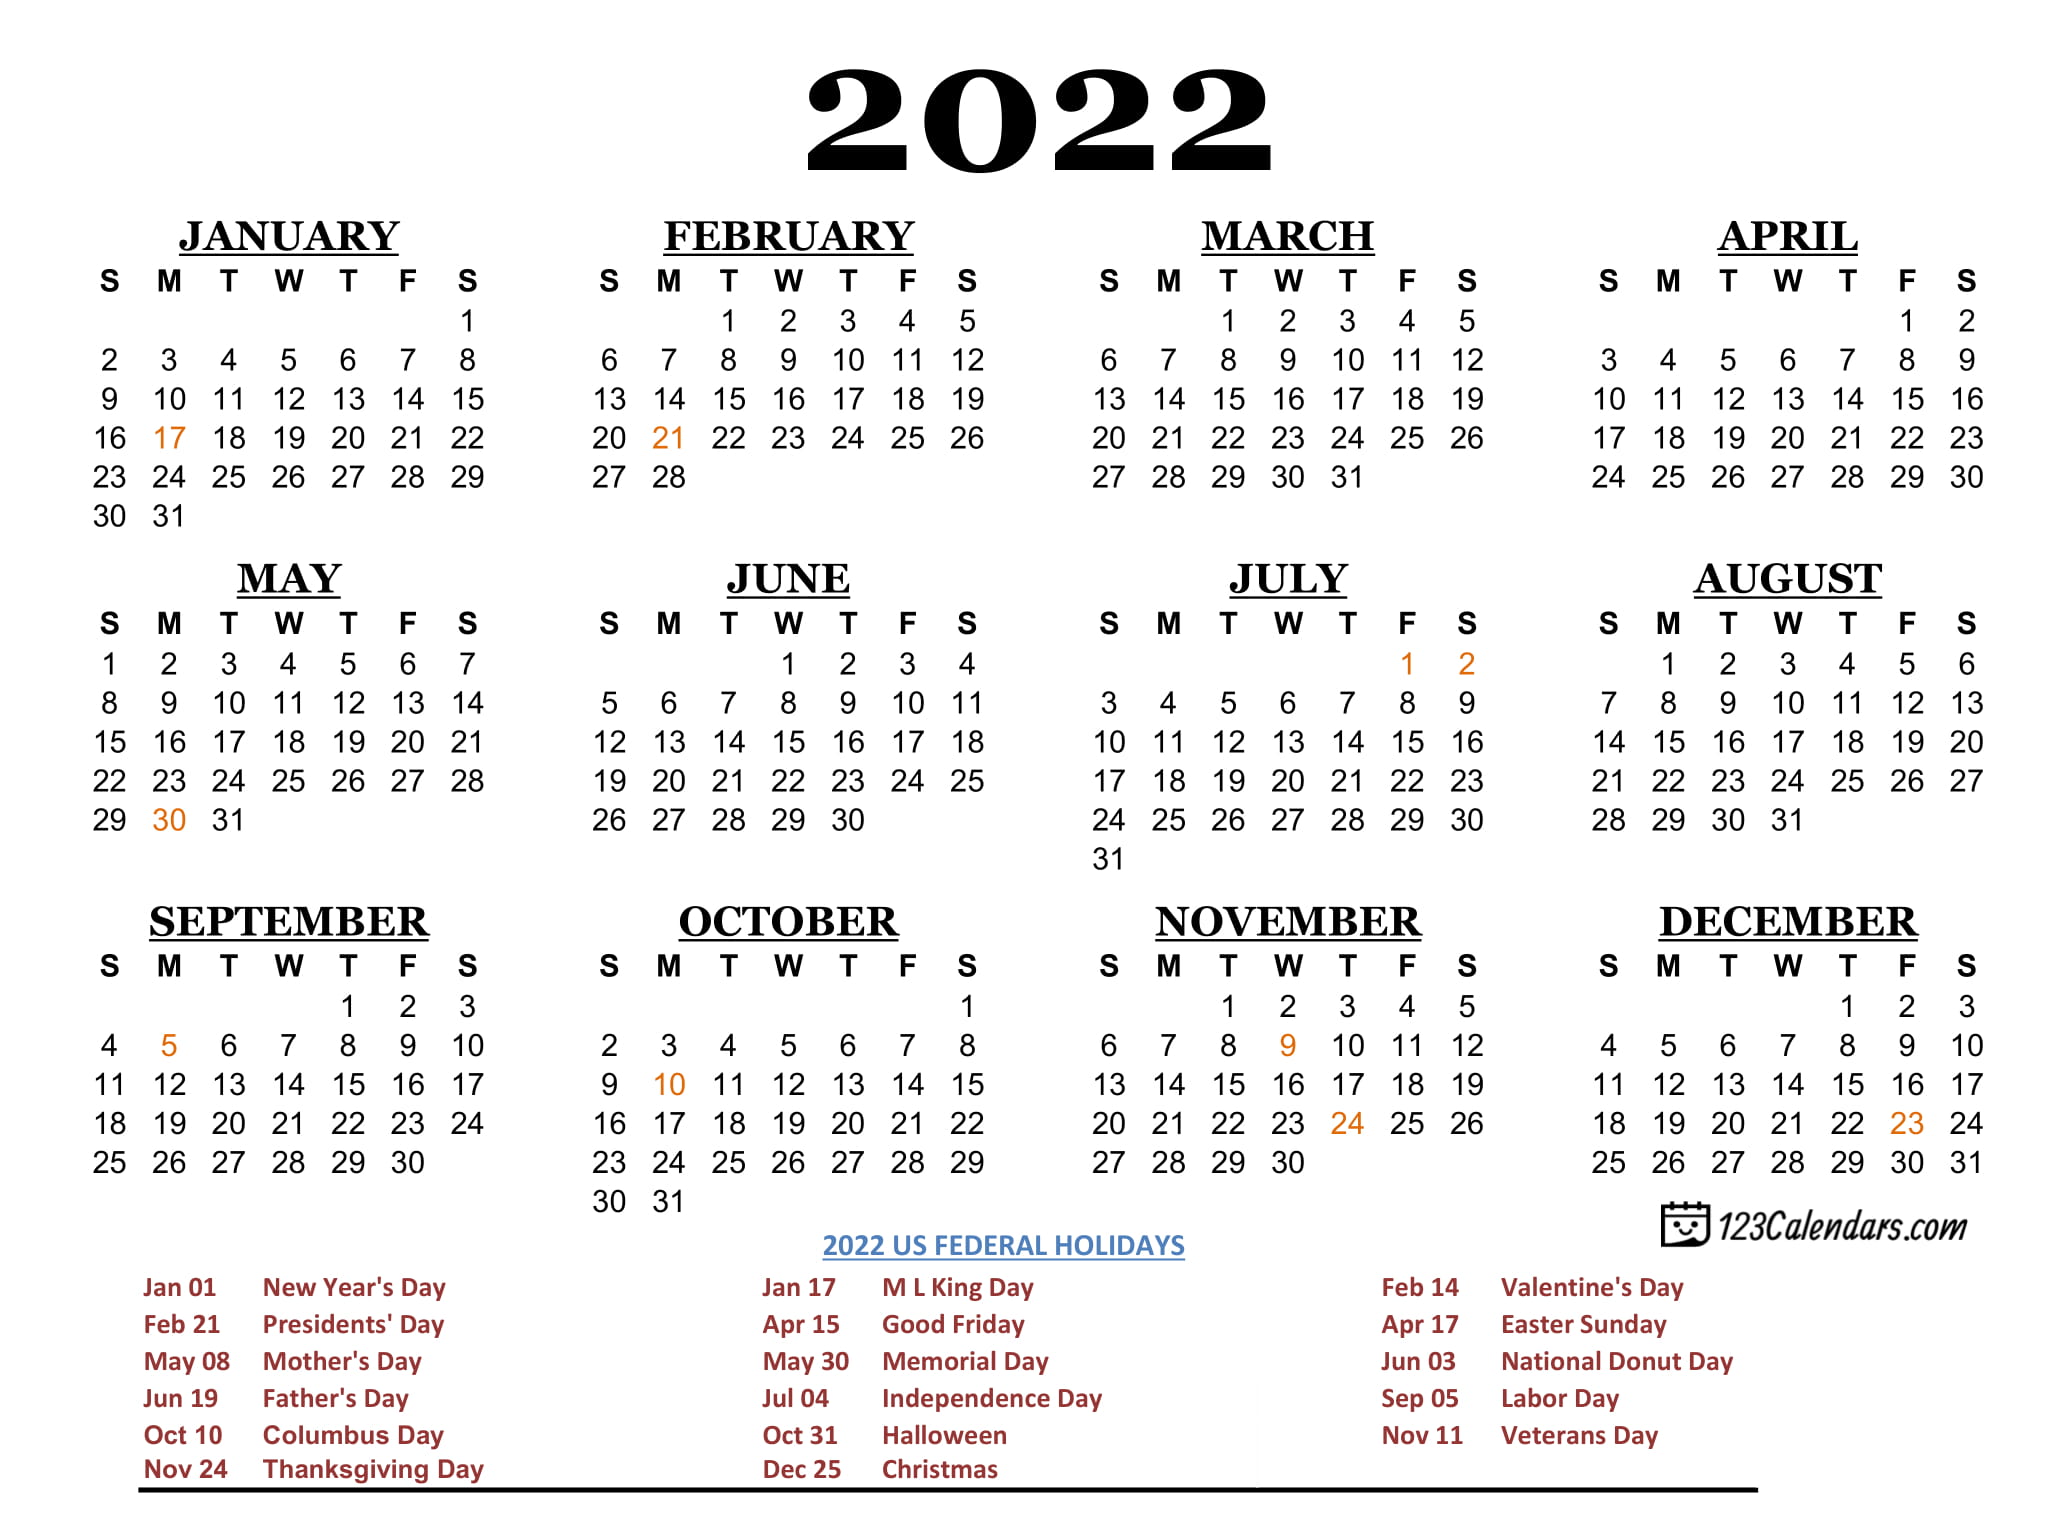 Fathers Day 2022 Calendar Year 2022 Calendar Templates | 123Calendars.com